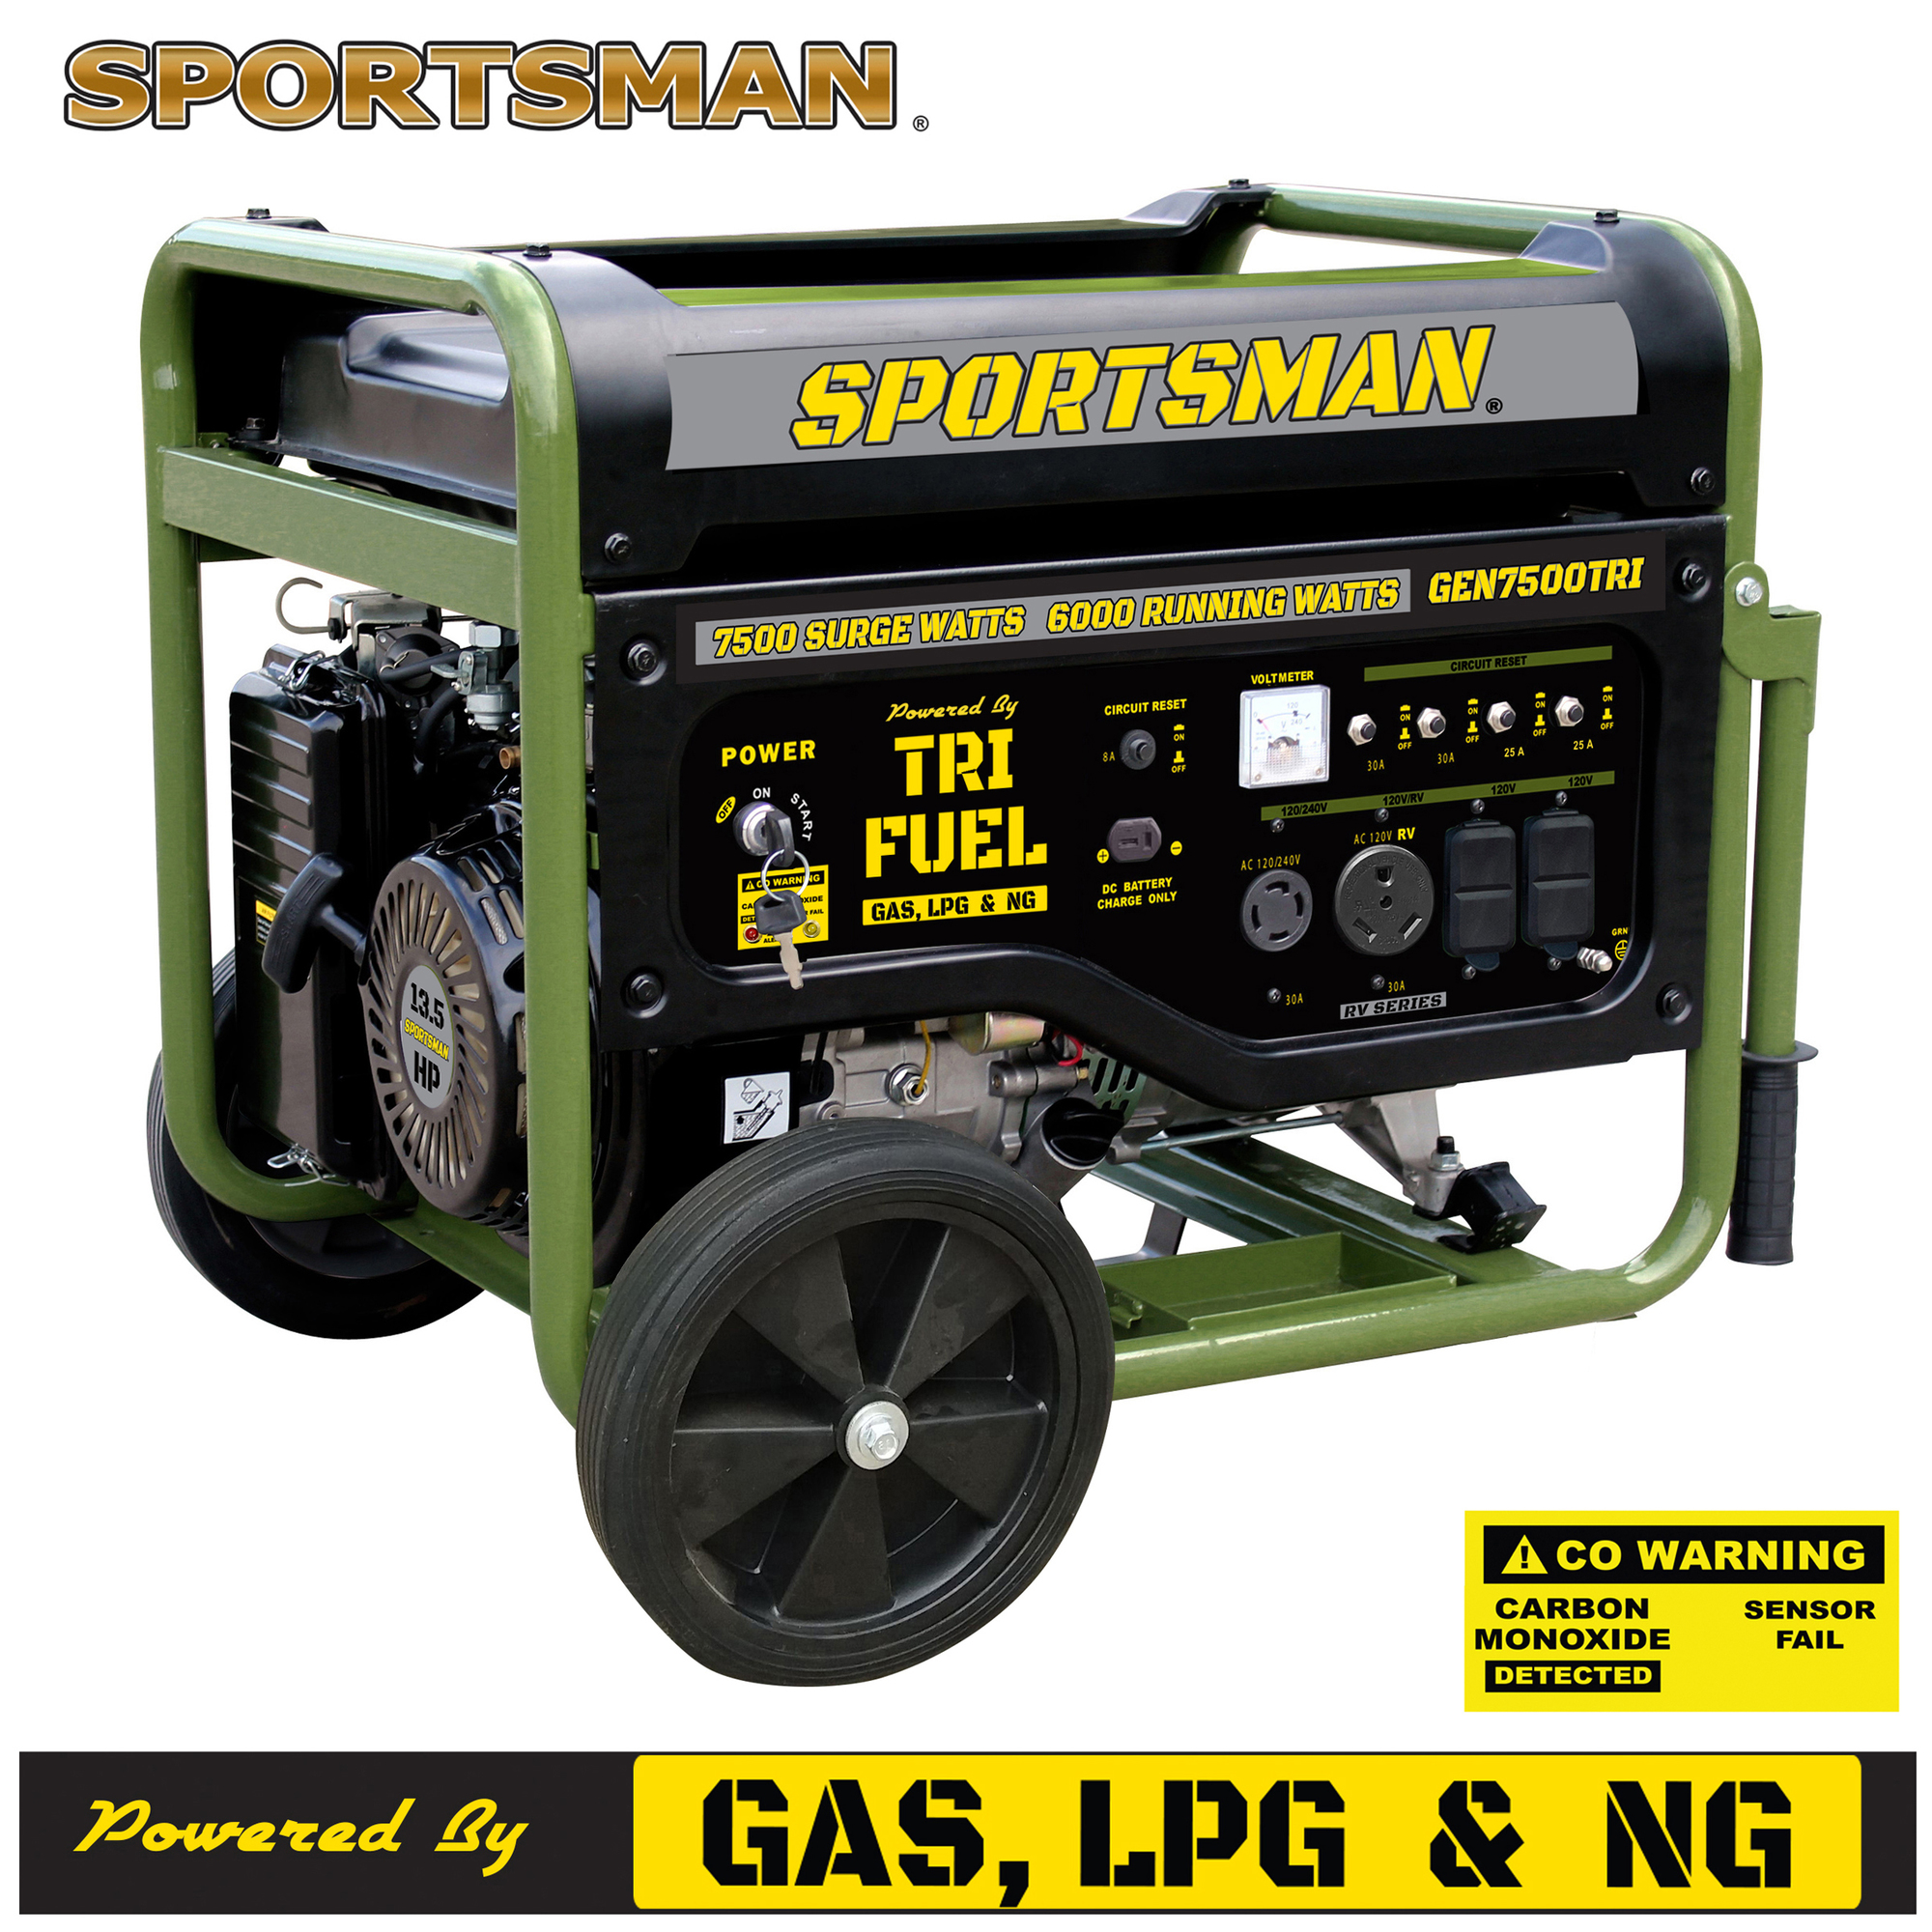 7500 Watt Portable Tri-Fuel Generator, Voltage 120/240 Model - Sportsman GEN7500TRI